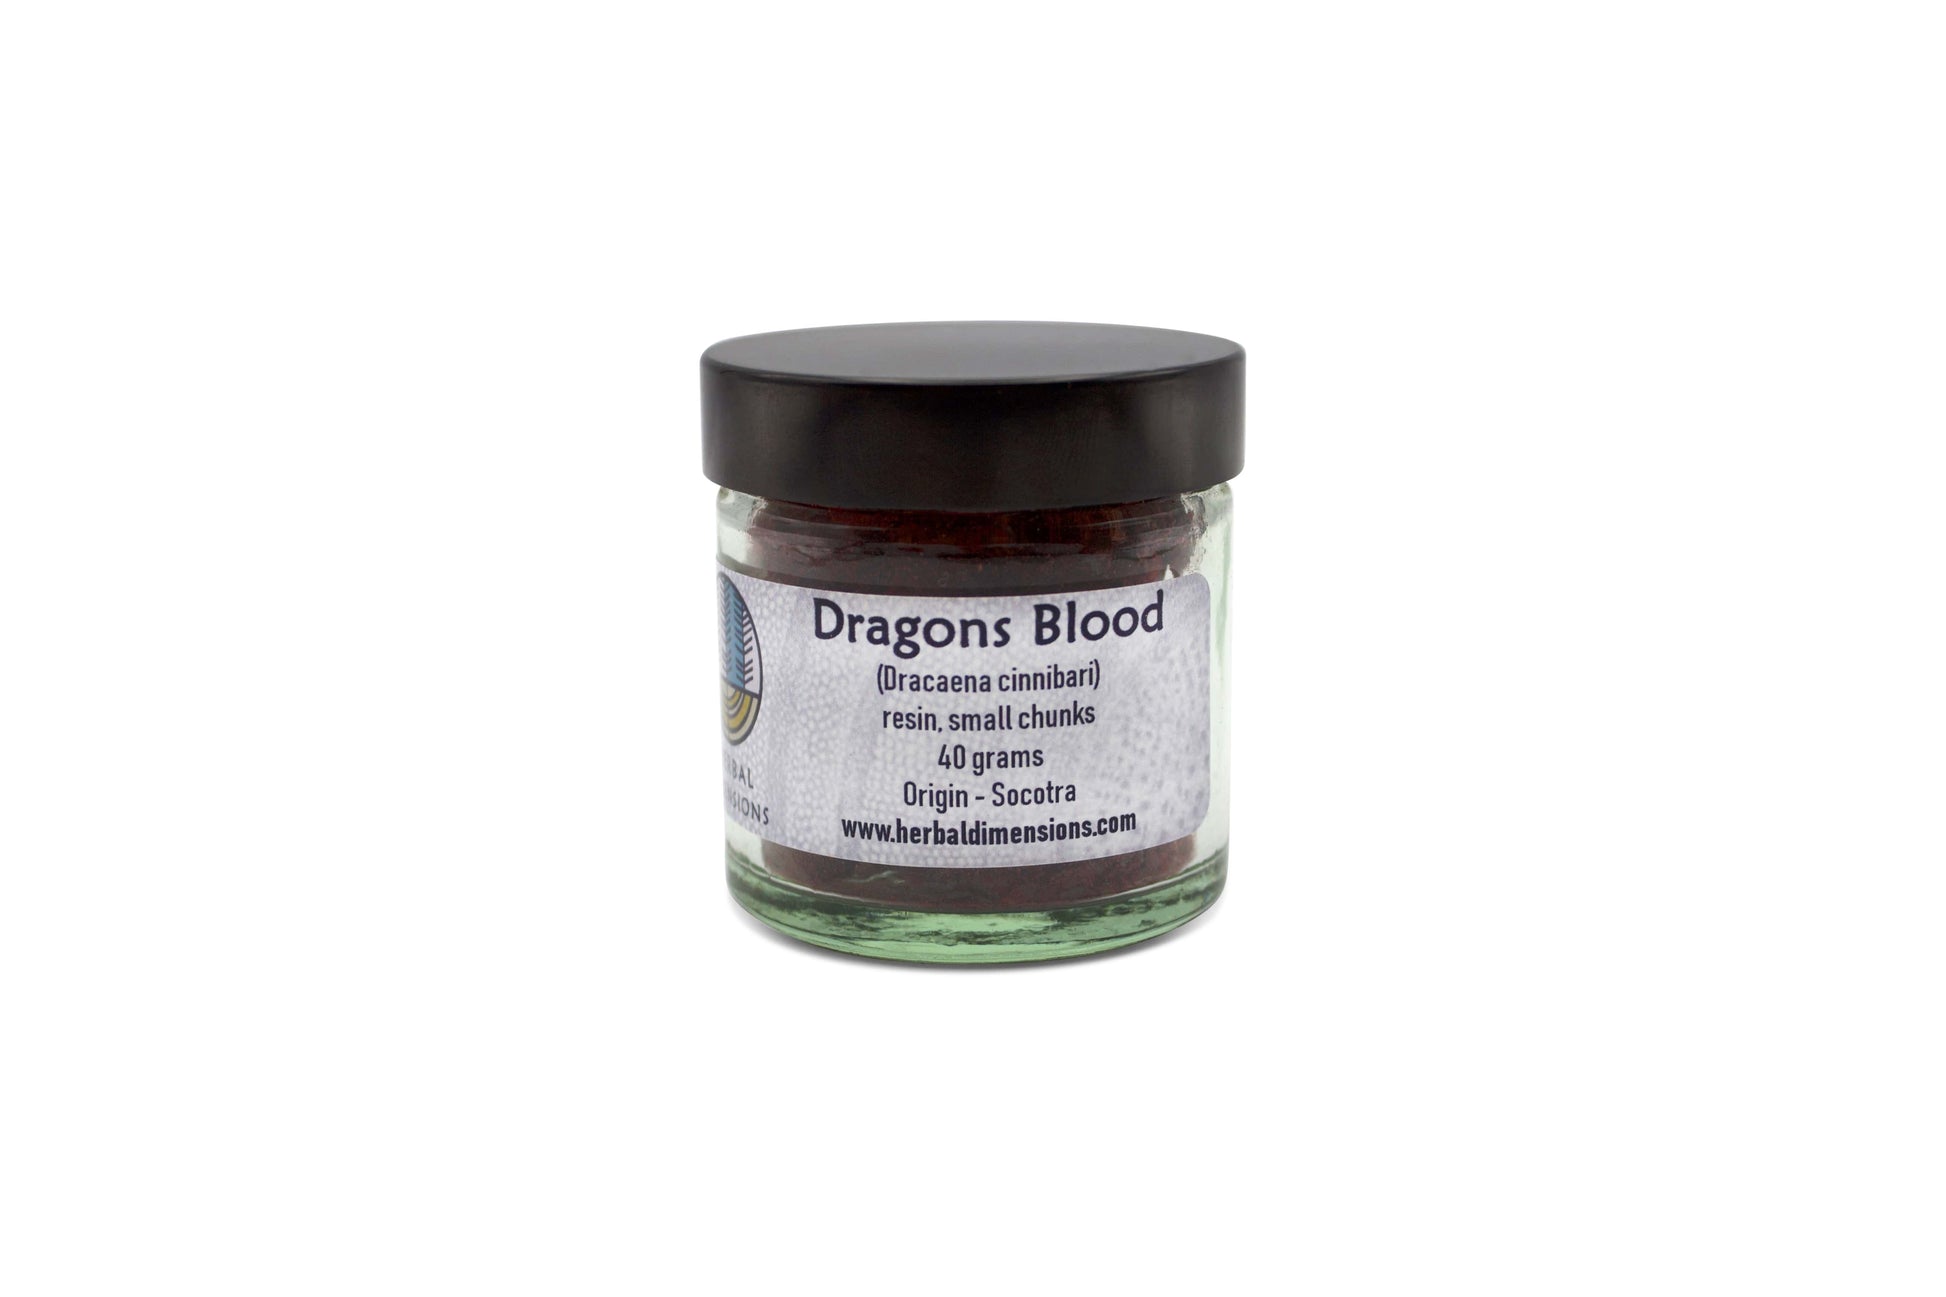 Dragons Blood in a glass jar